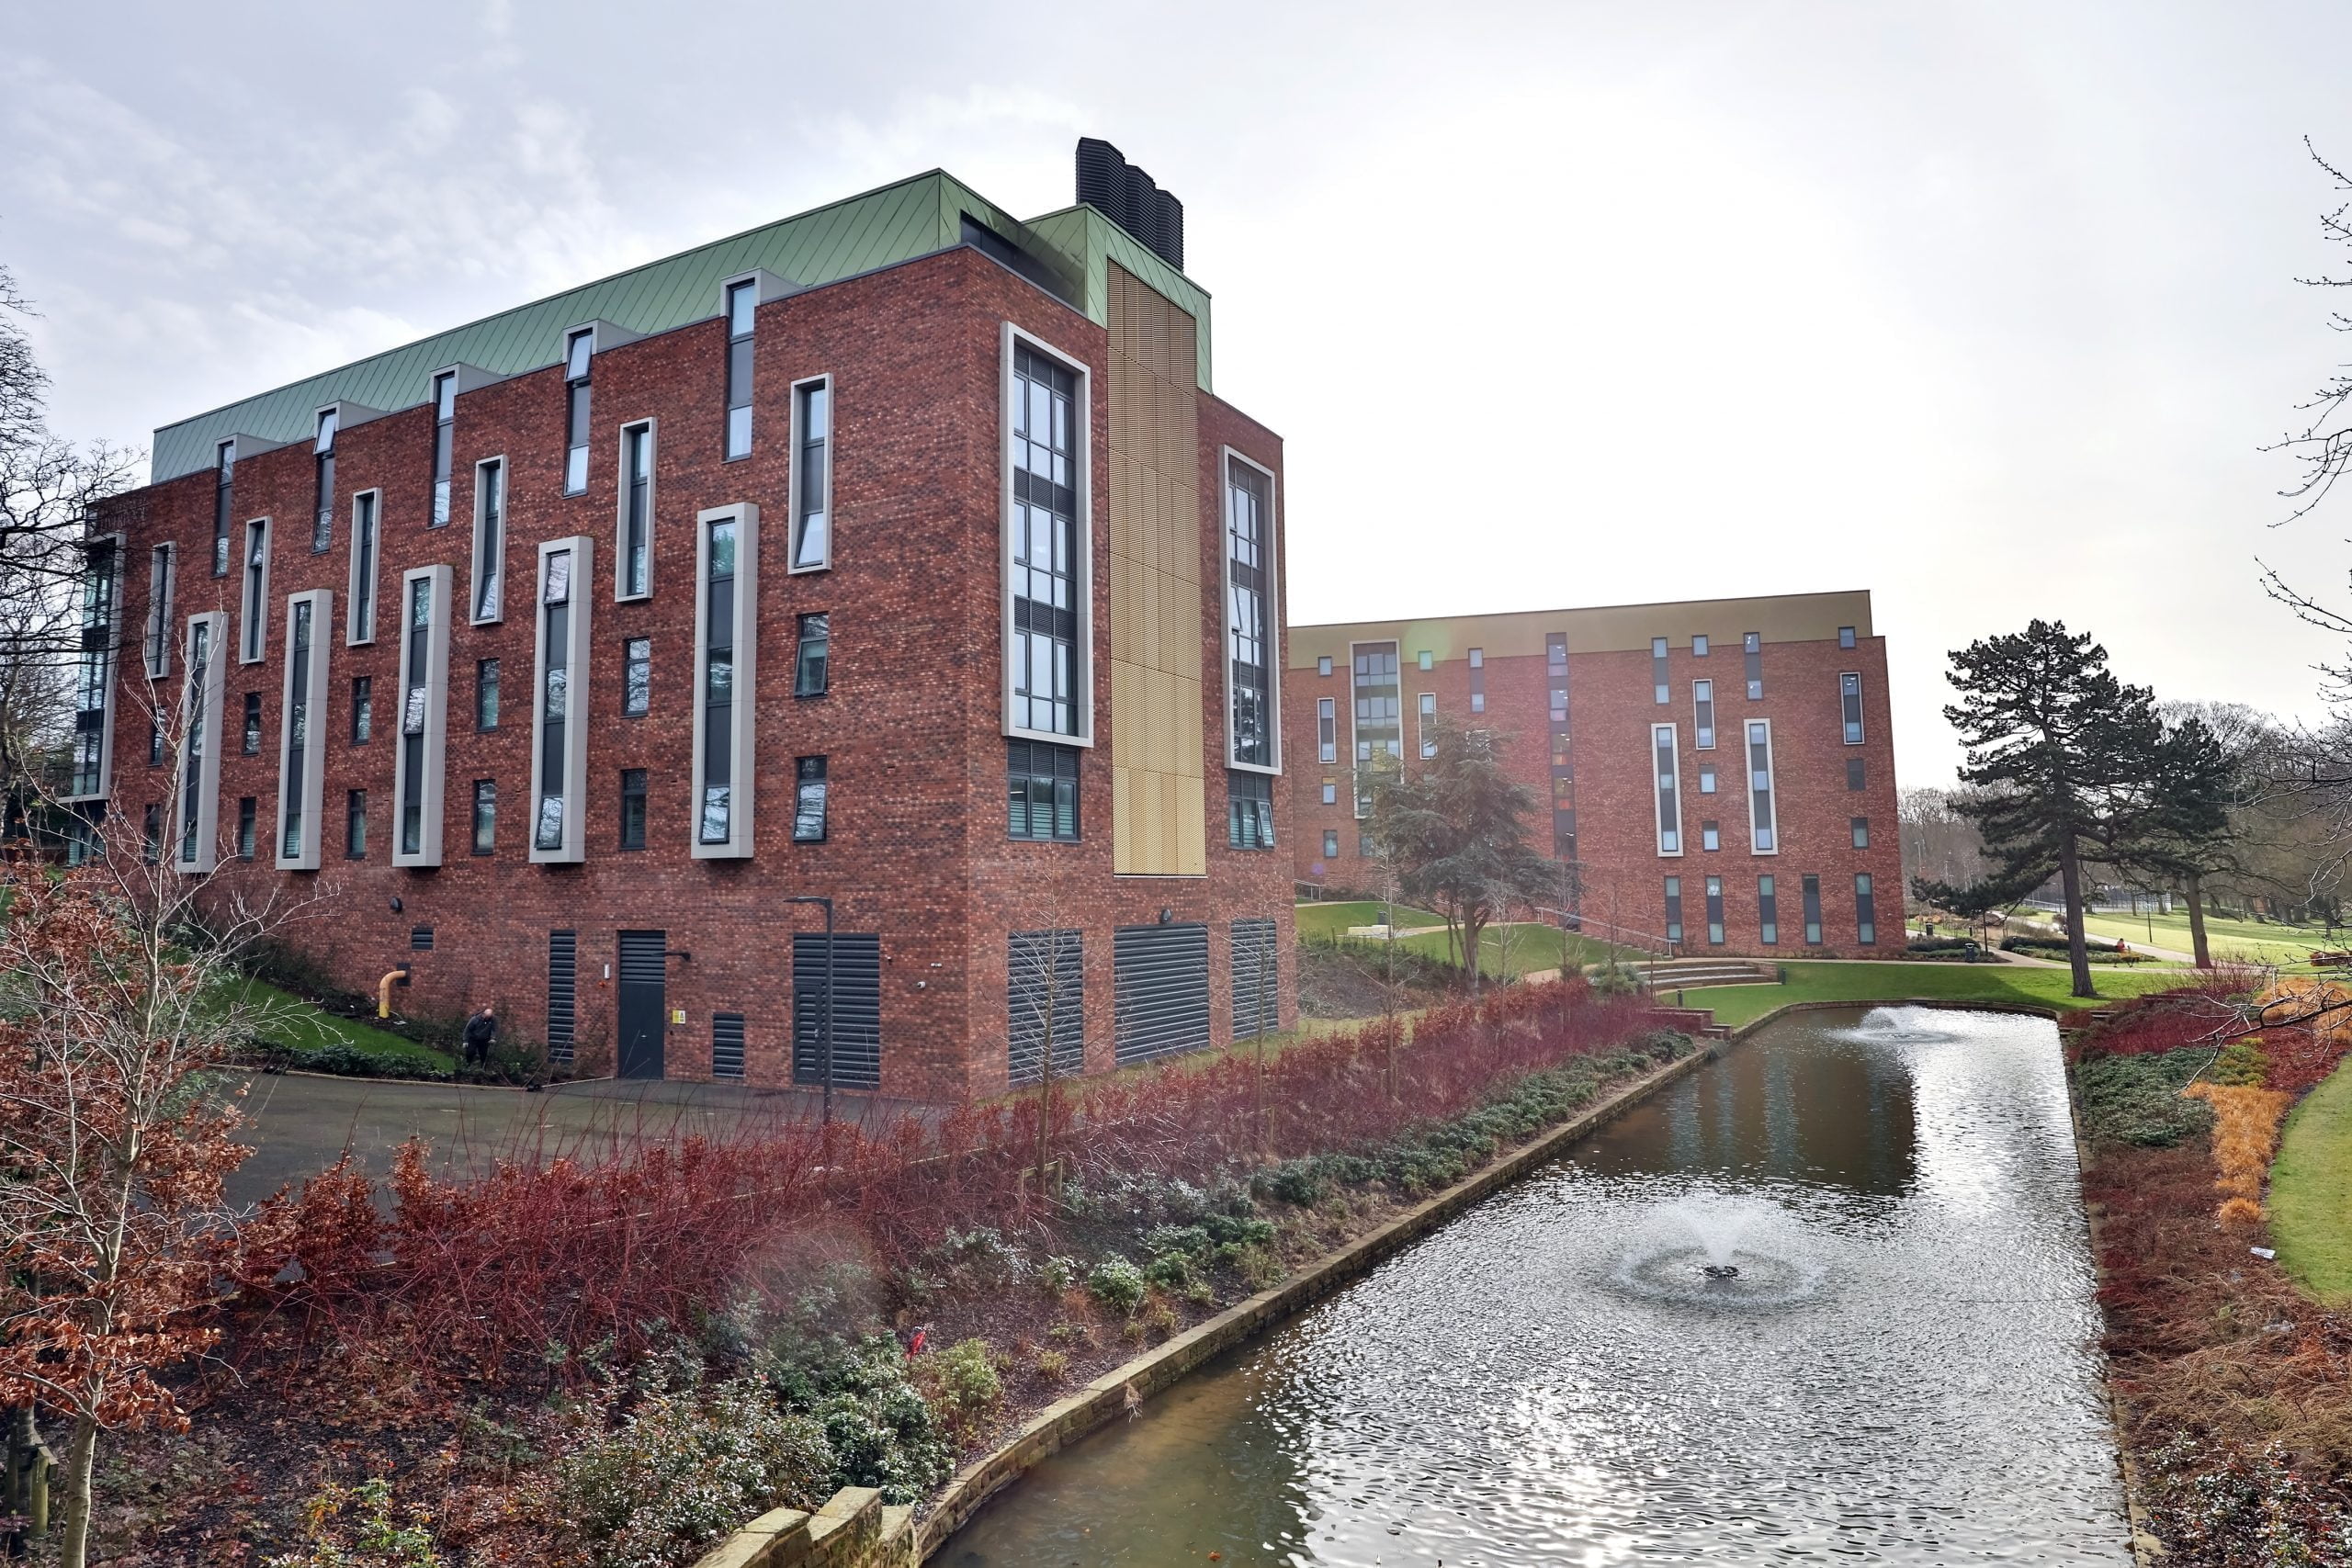 University of Liverpool Greenbank Campus